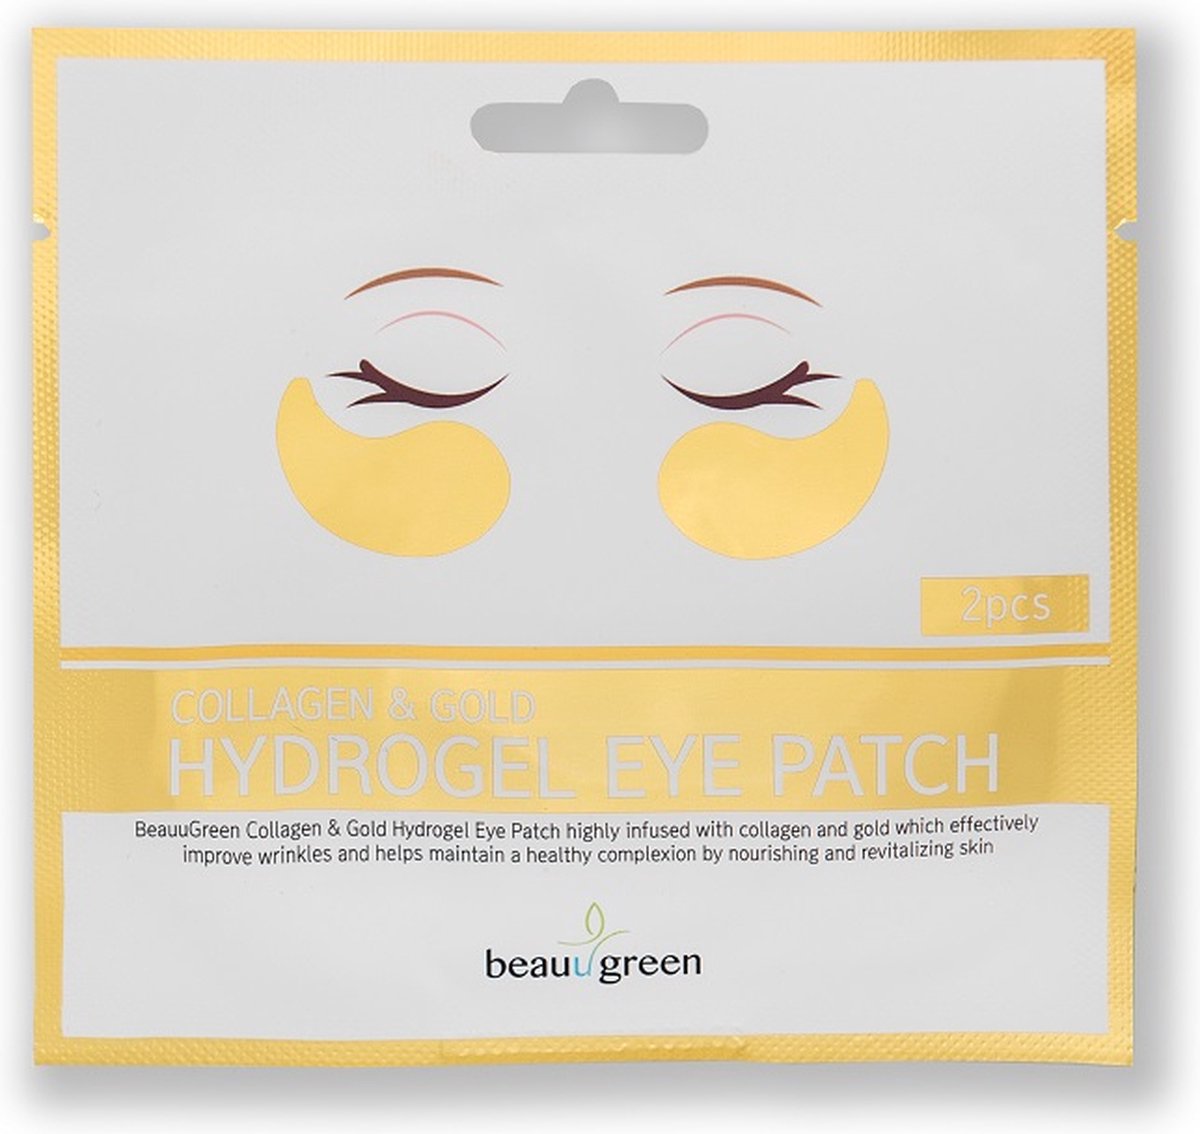 Beauugreen - Collagen & Gold Hydrogel Eye Patch Hydrogel Eye Flakes 2Pcs.